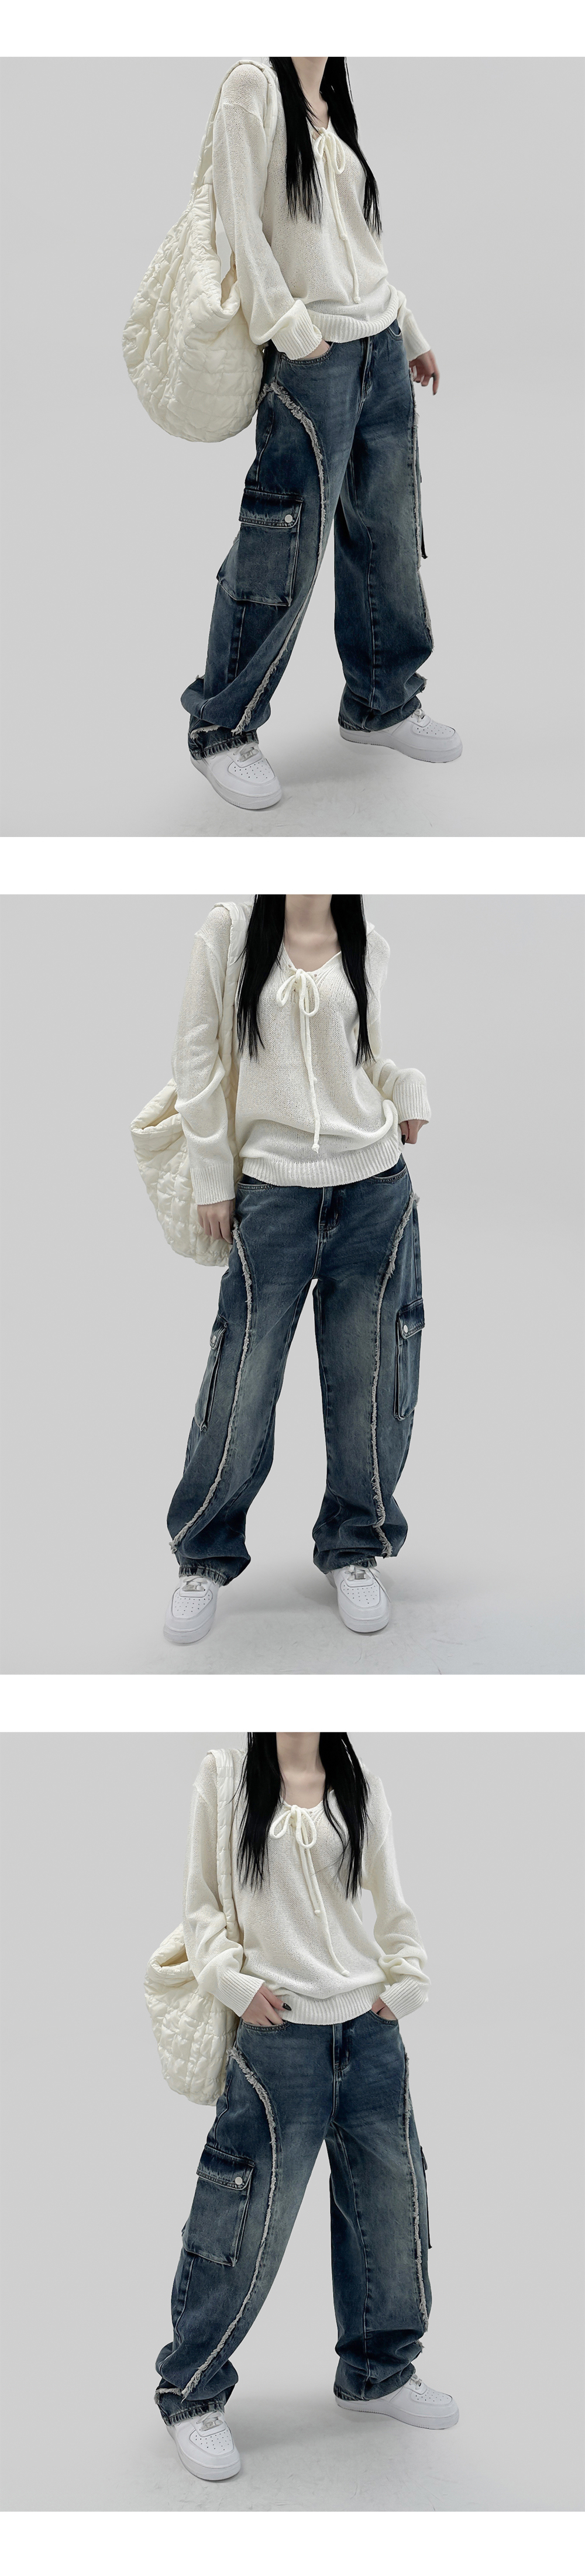 suspenders skirt/pants white color image-S1L4